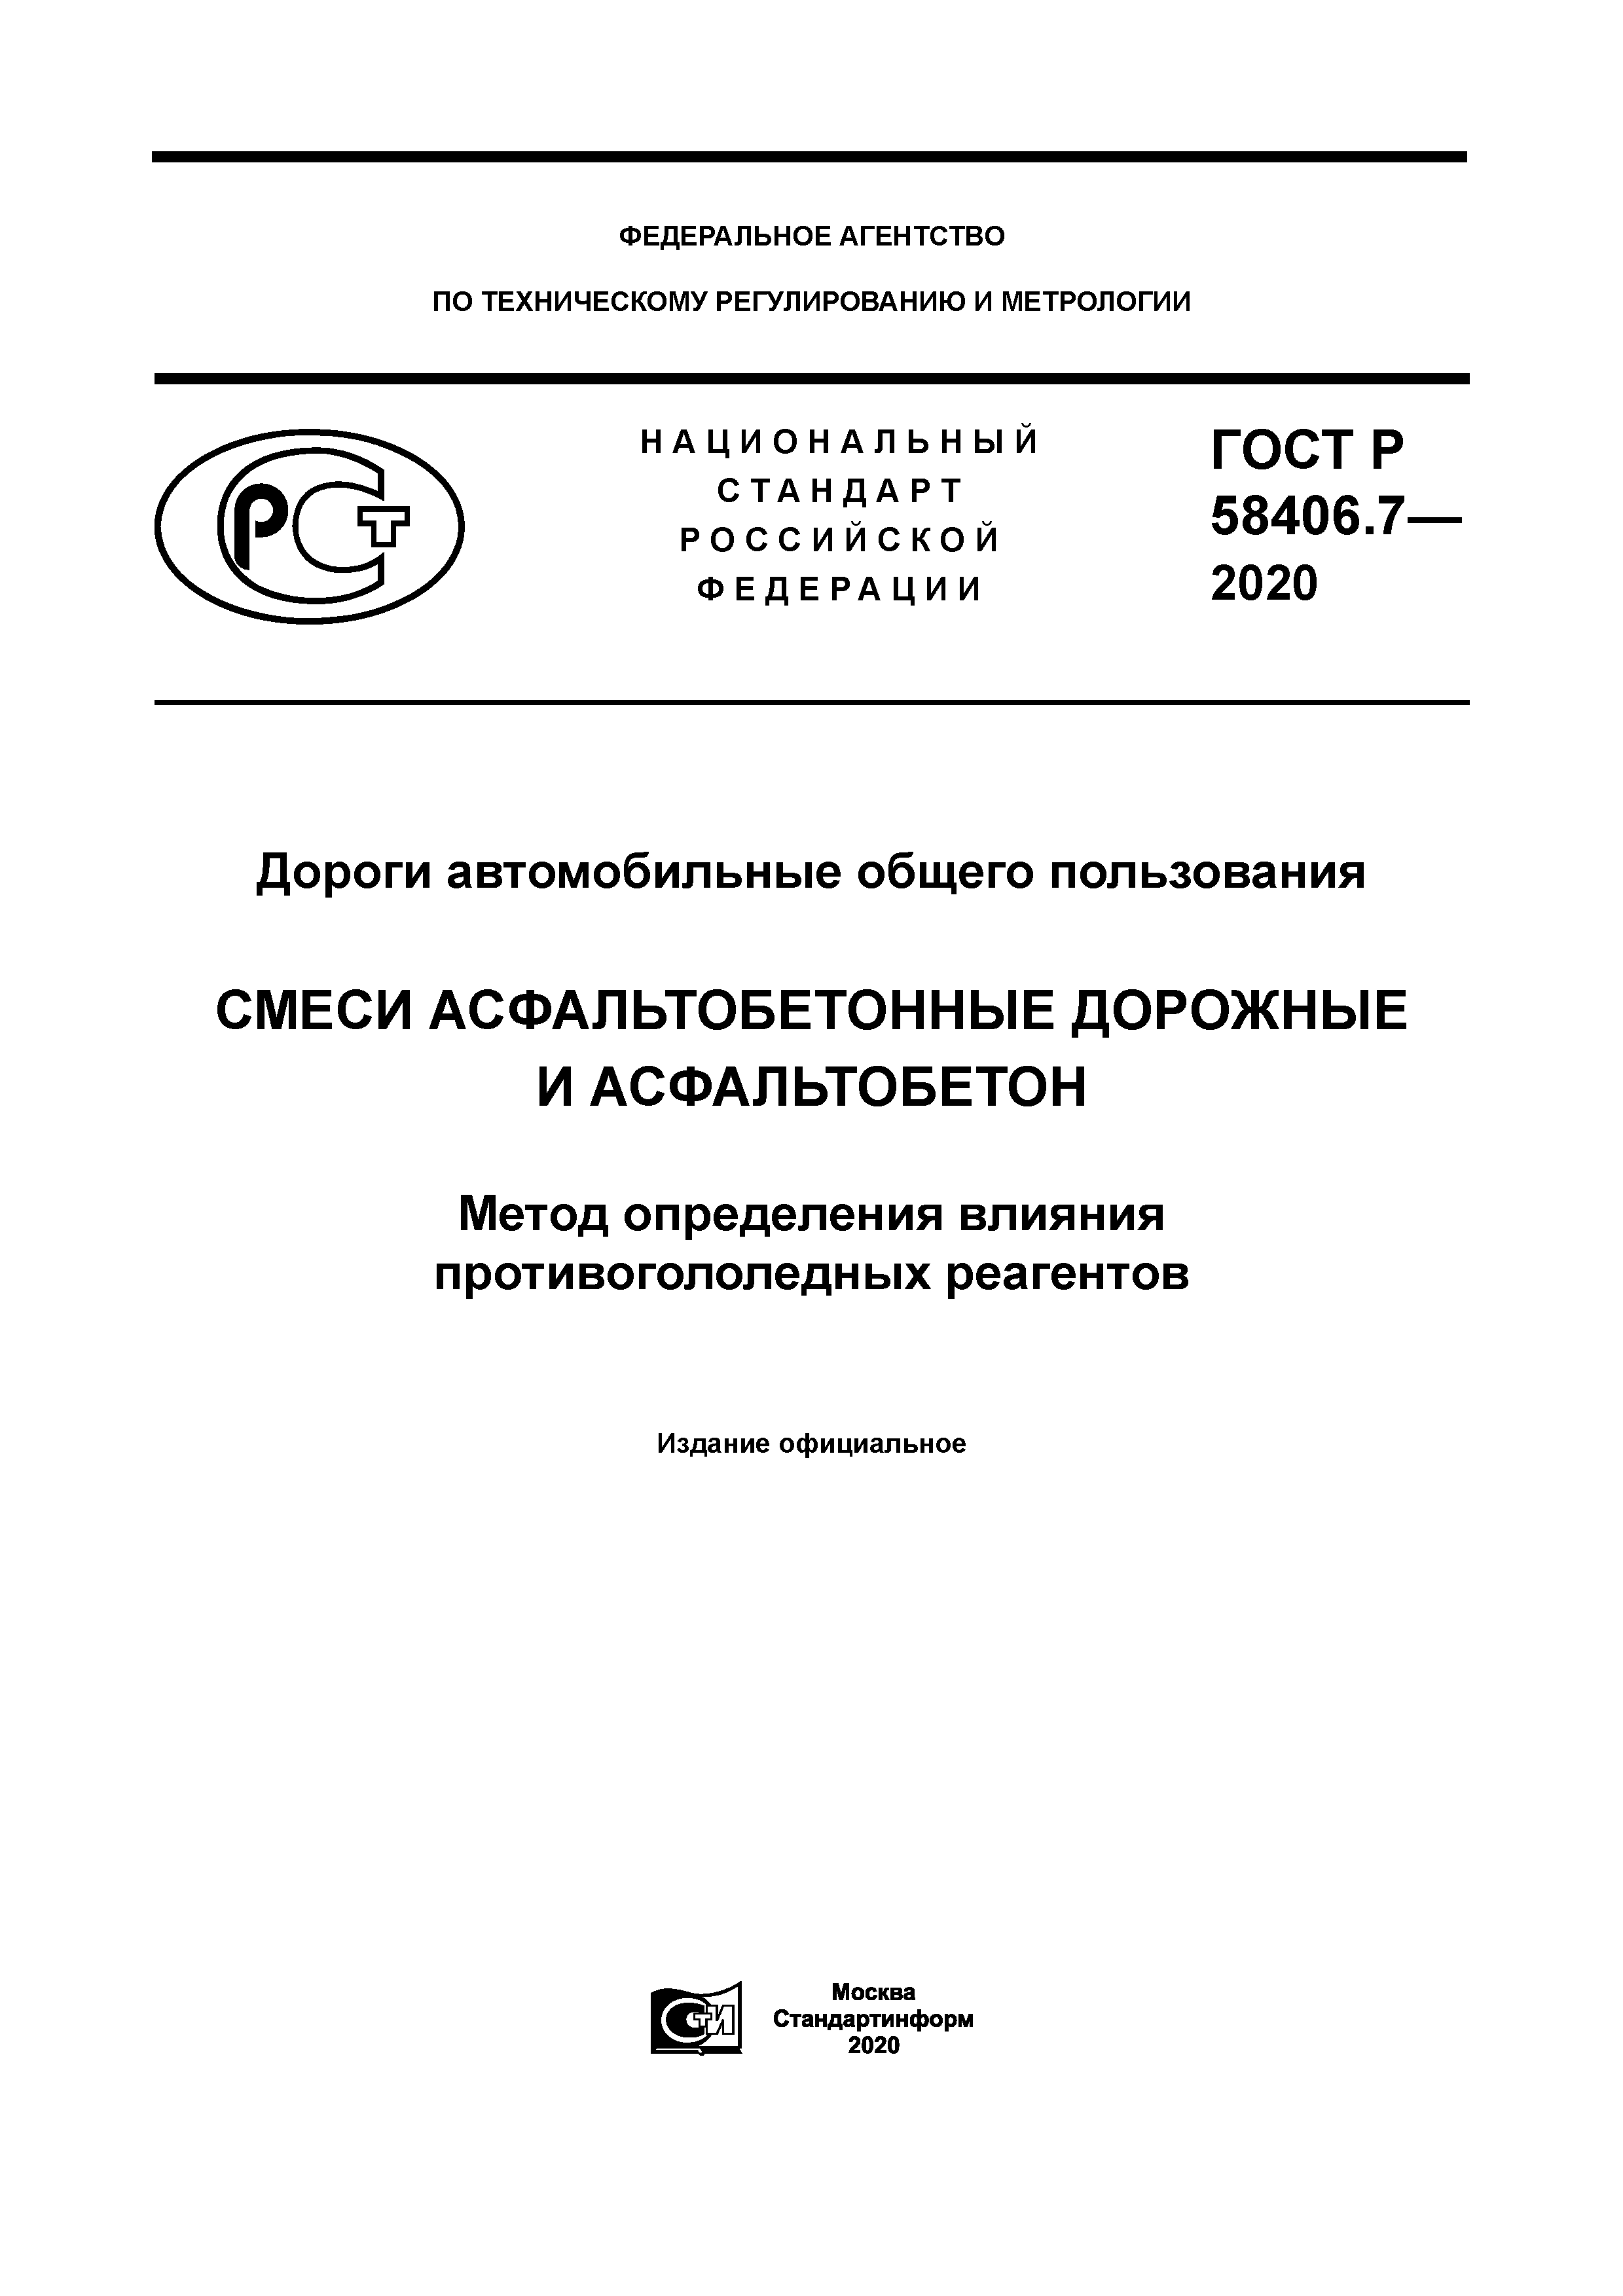 ГОСТ Р 58406.7-2020